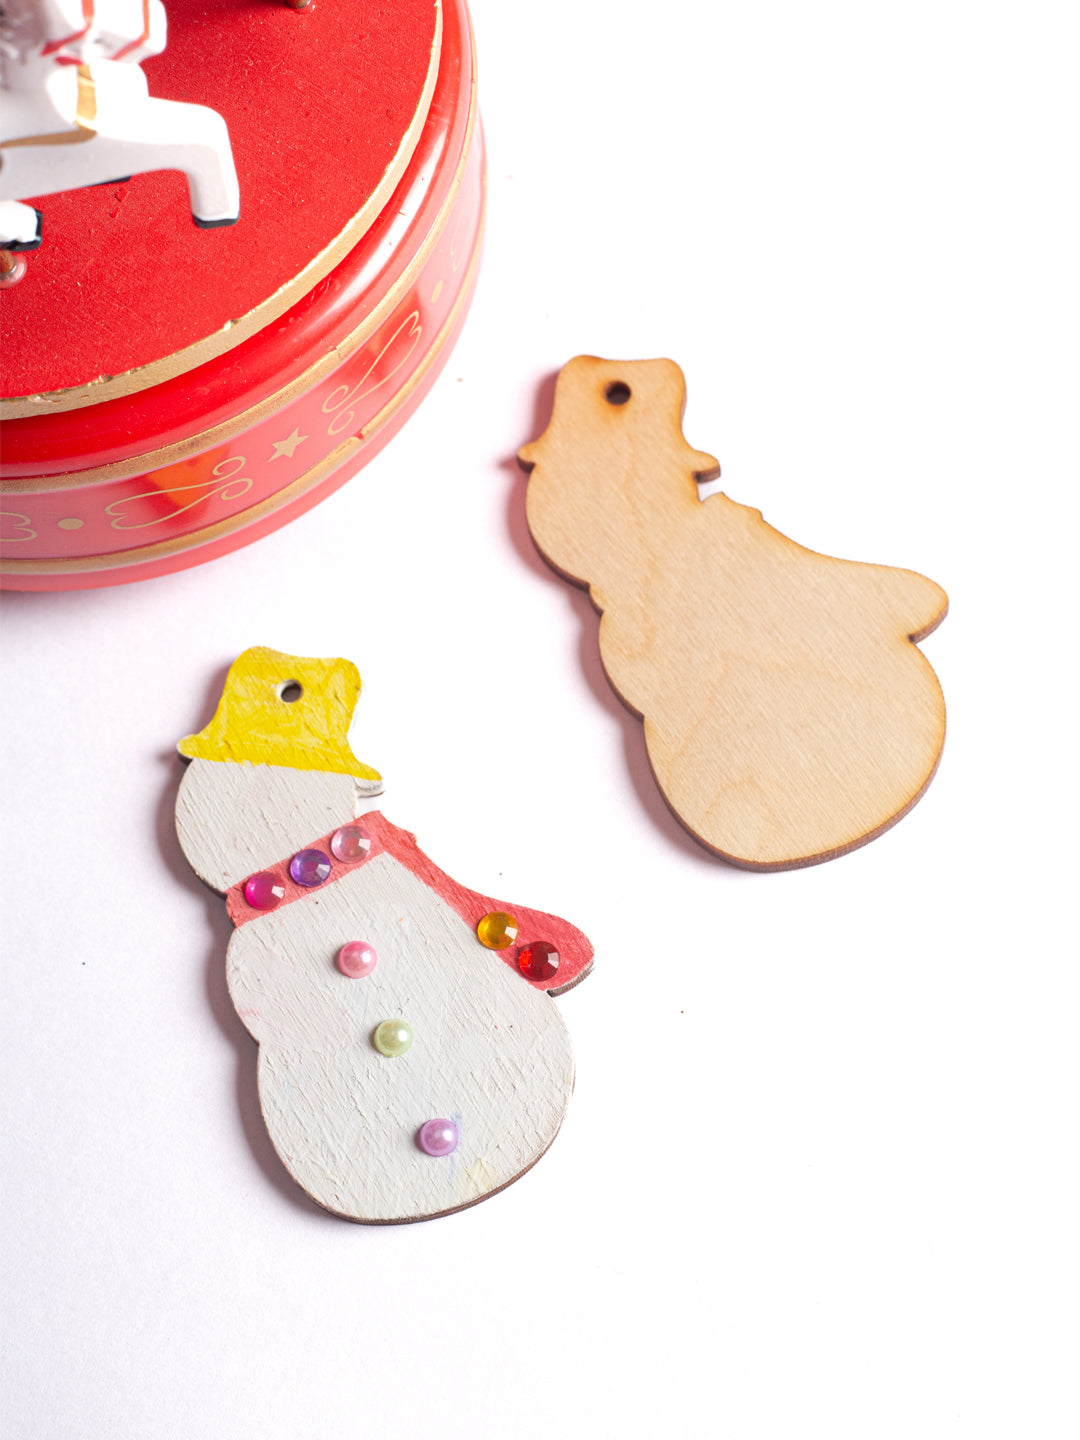 Jingle Joy DIY Kit - Christmas Ornaments Craft Set